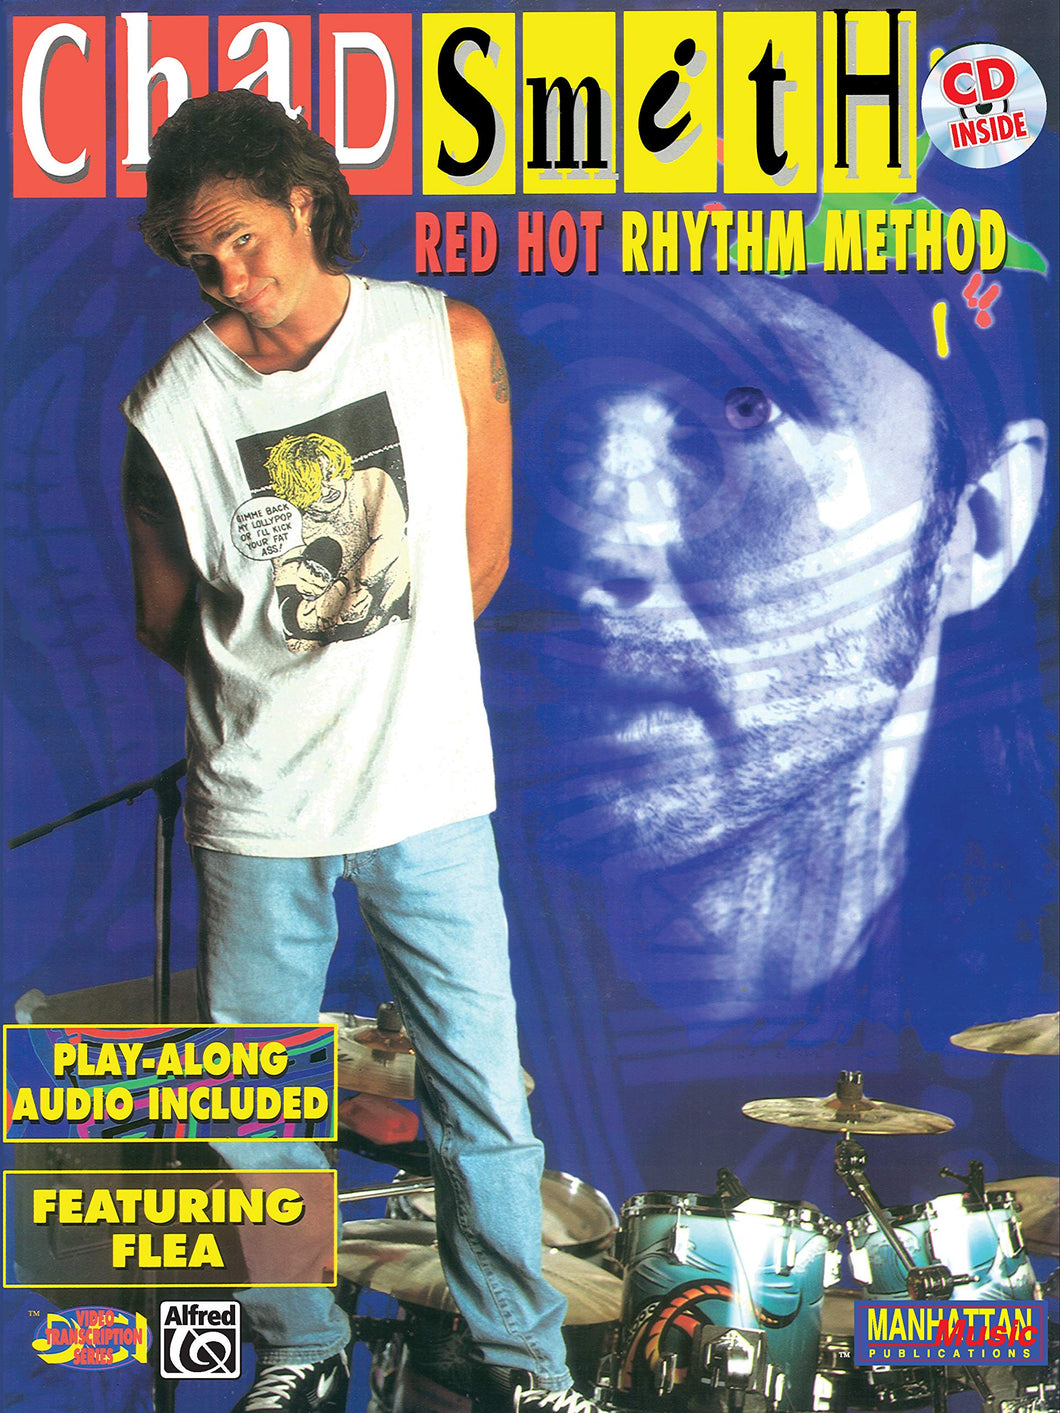 Chad Smith: Red Hot Rhythm Method - Chad Smith featuring Flea publication cover